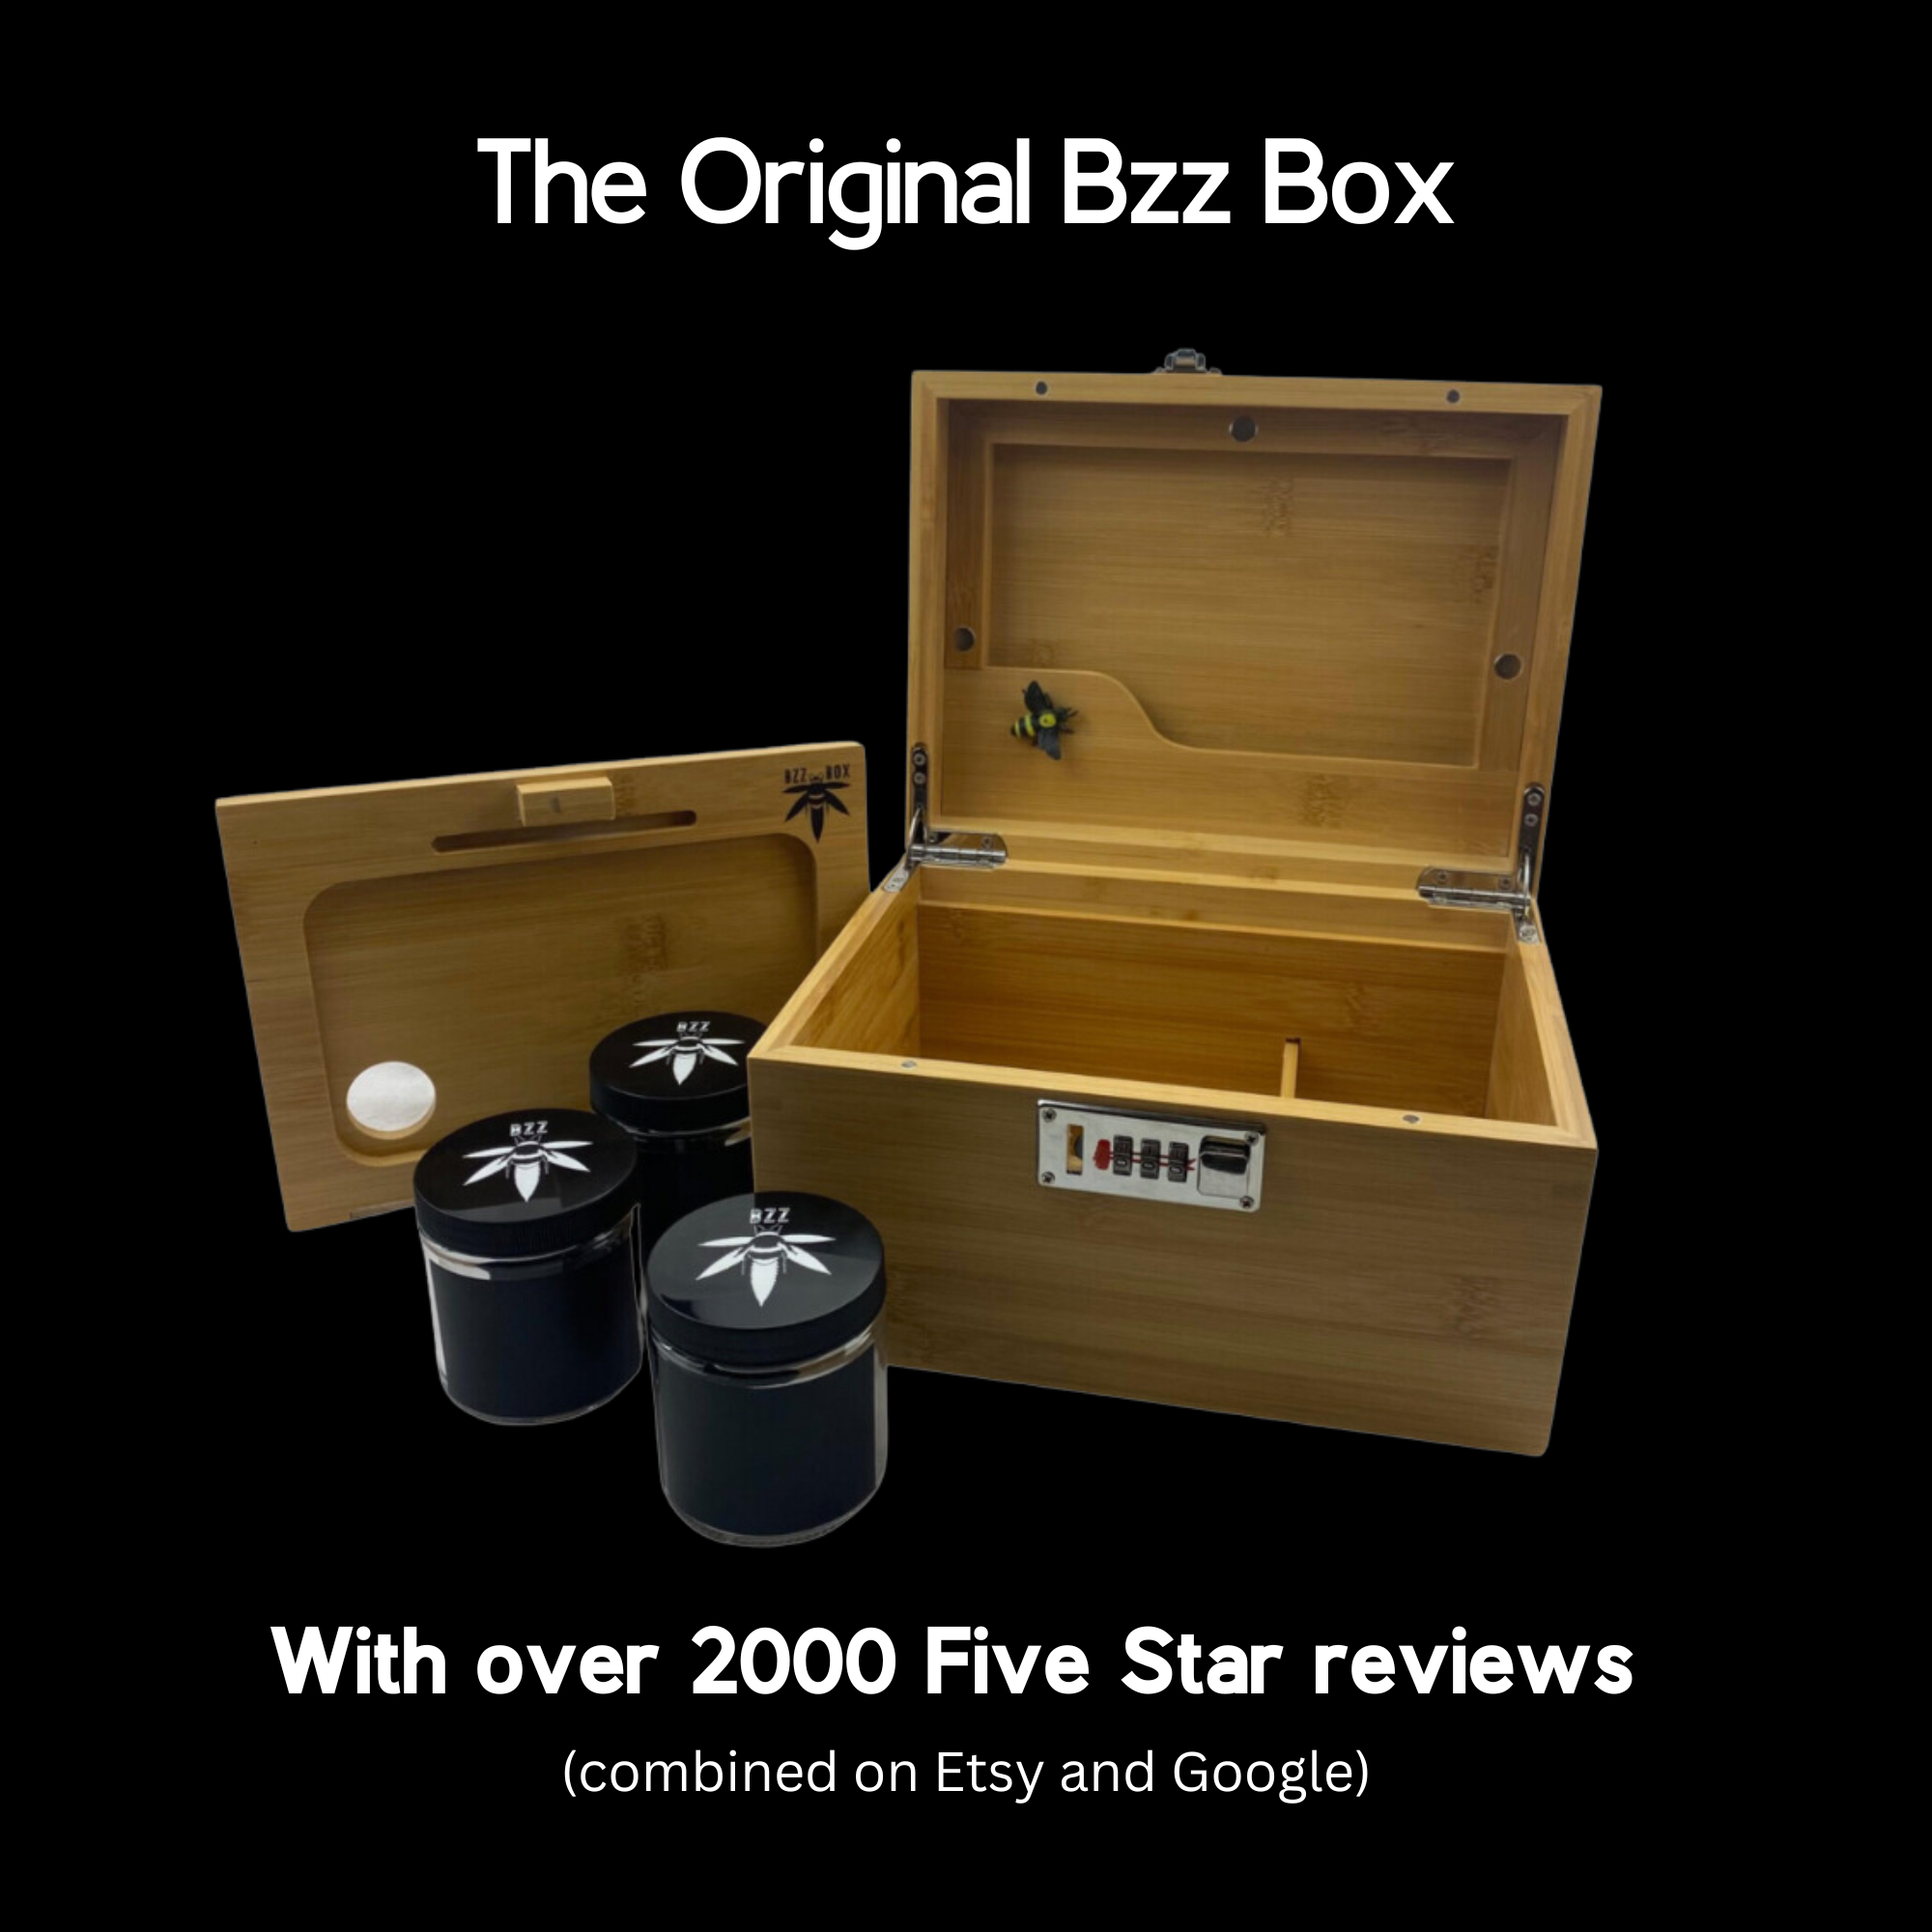 Stash Box - XL Bamboo Bzz Box (14.5 x 8.5 x 7)